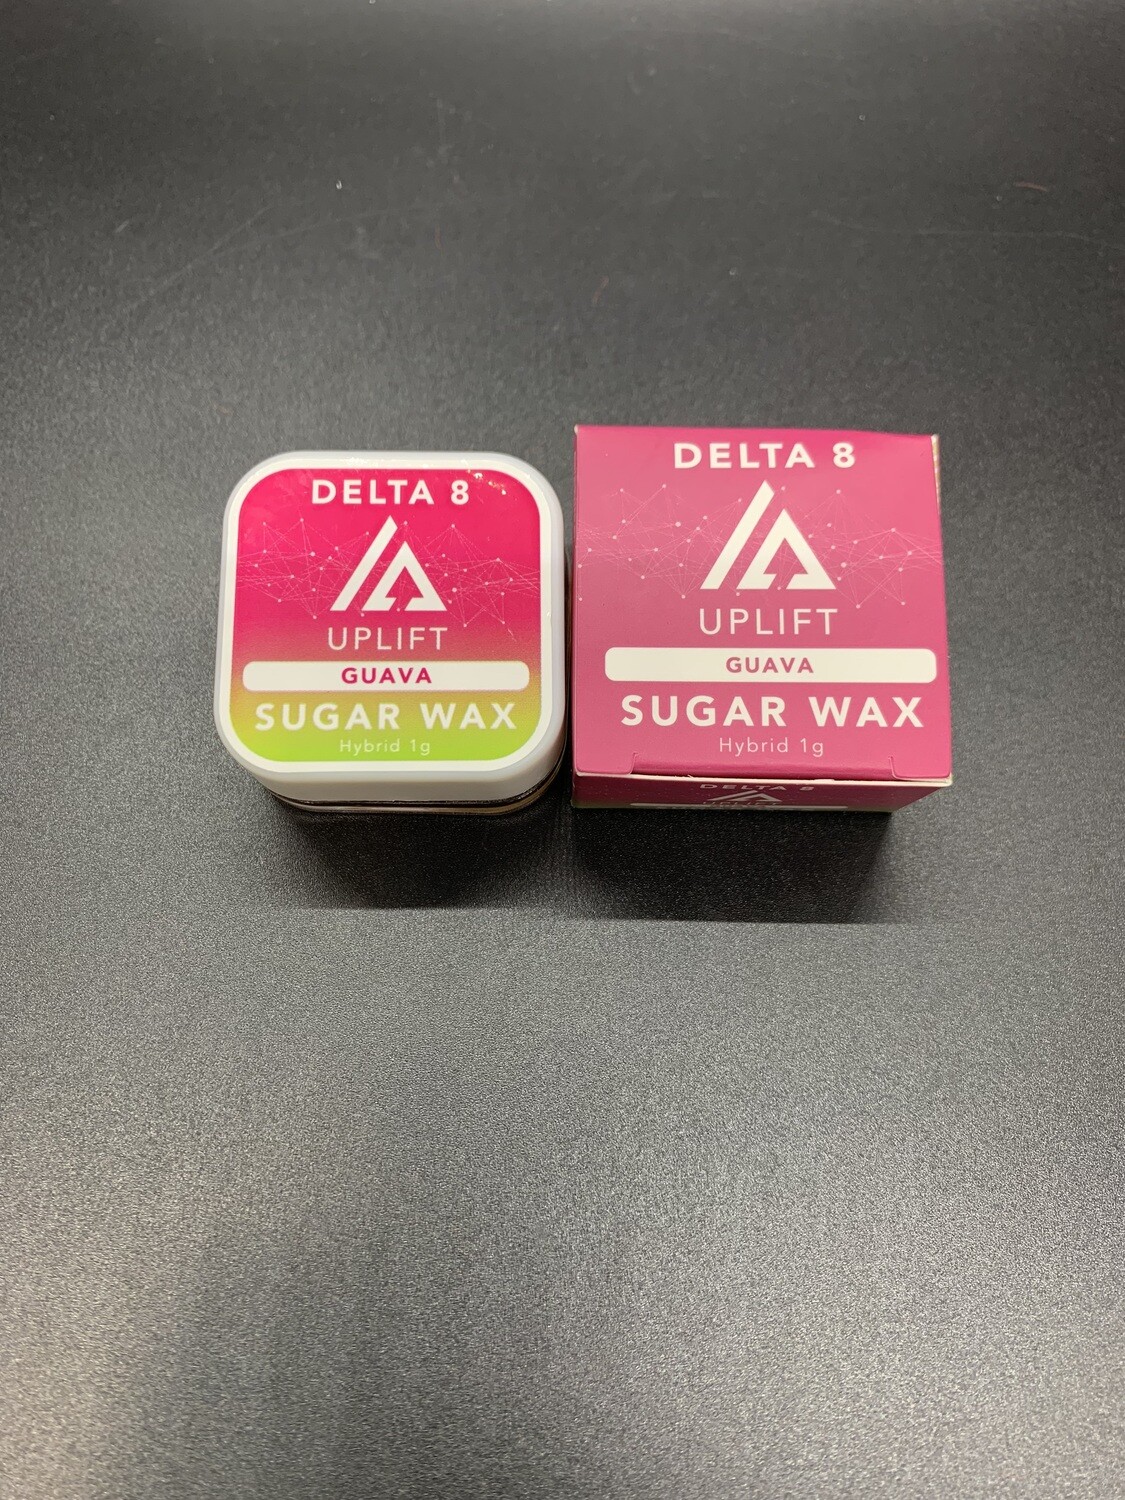 Uplift 1g Delta 8 Guava Sugar Wax Concentrate